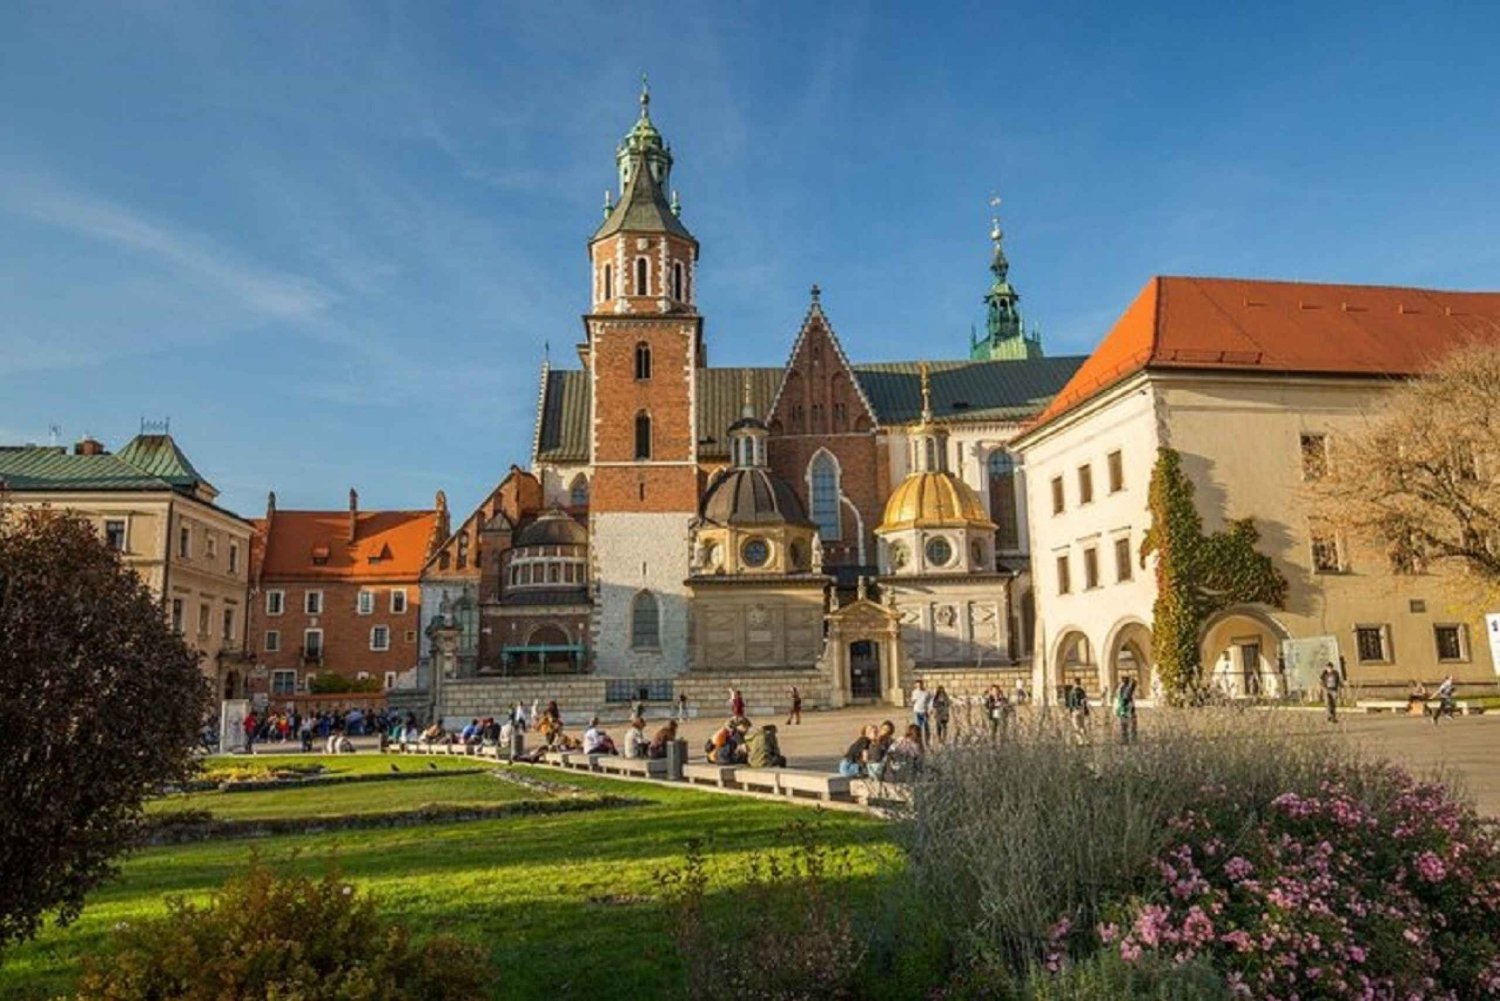 Kraków: 3-Tage-Tour zum Schloss Wawel, Wieliczka und Auschwitz